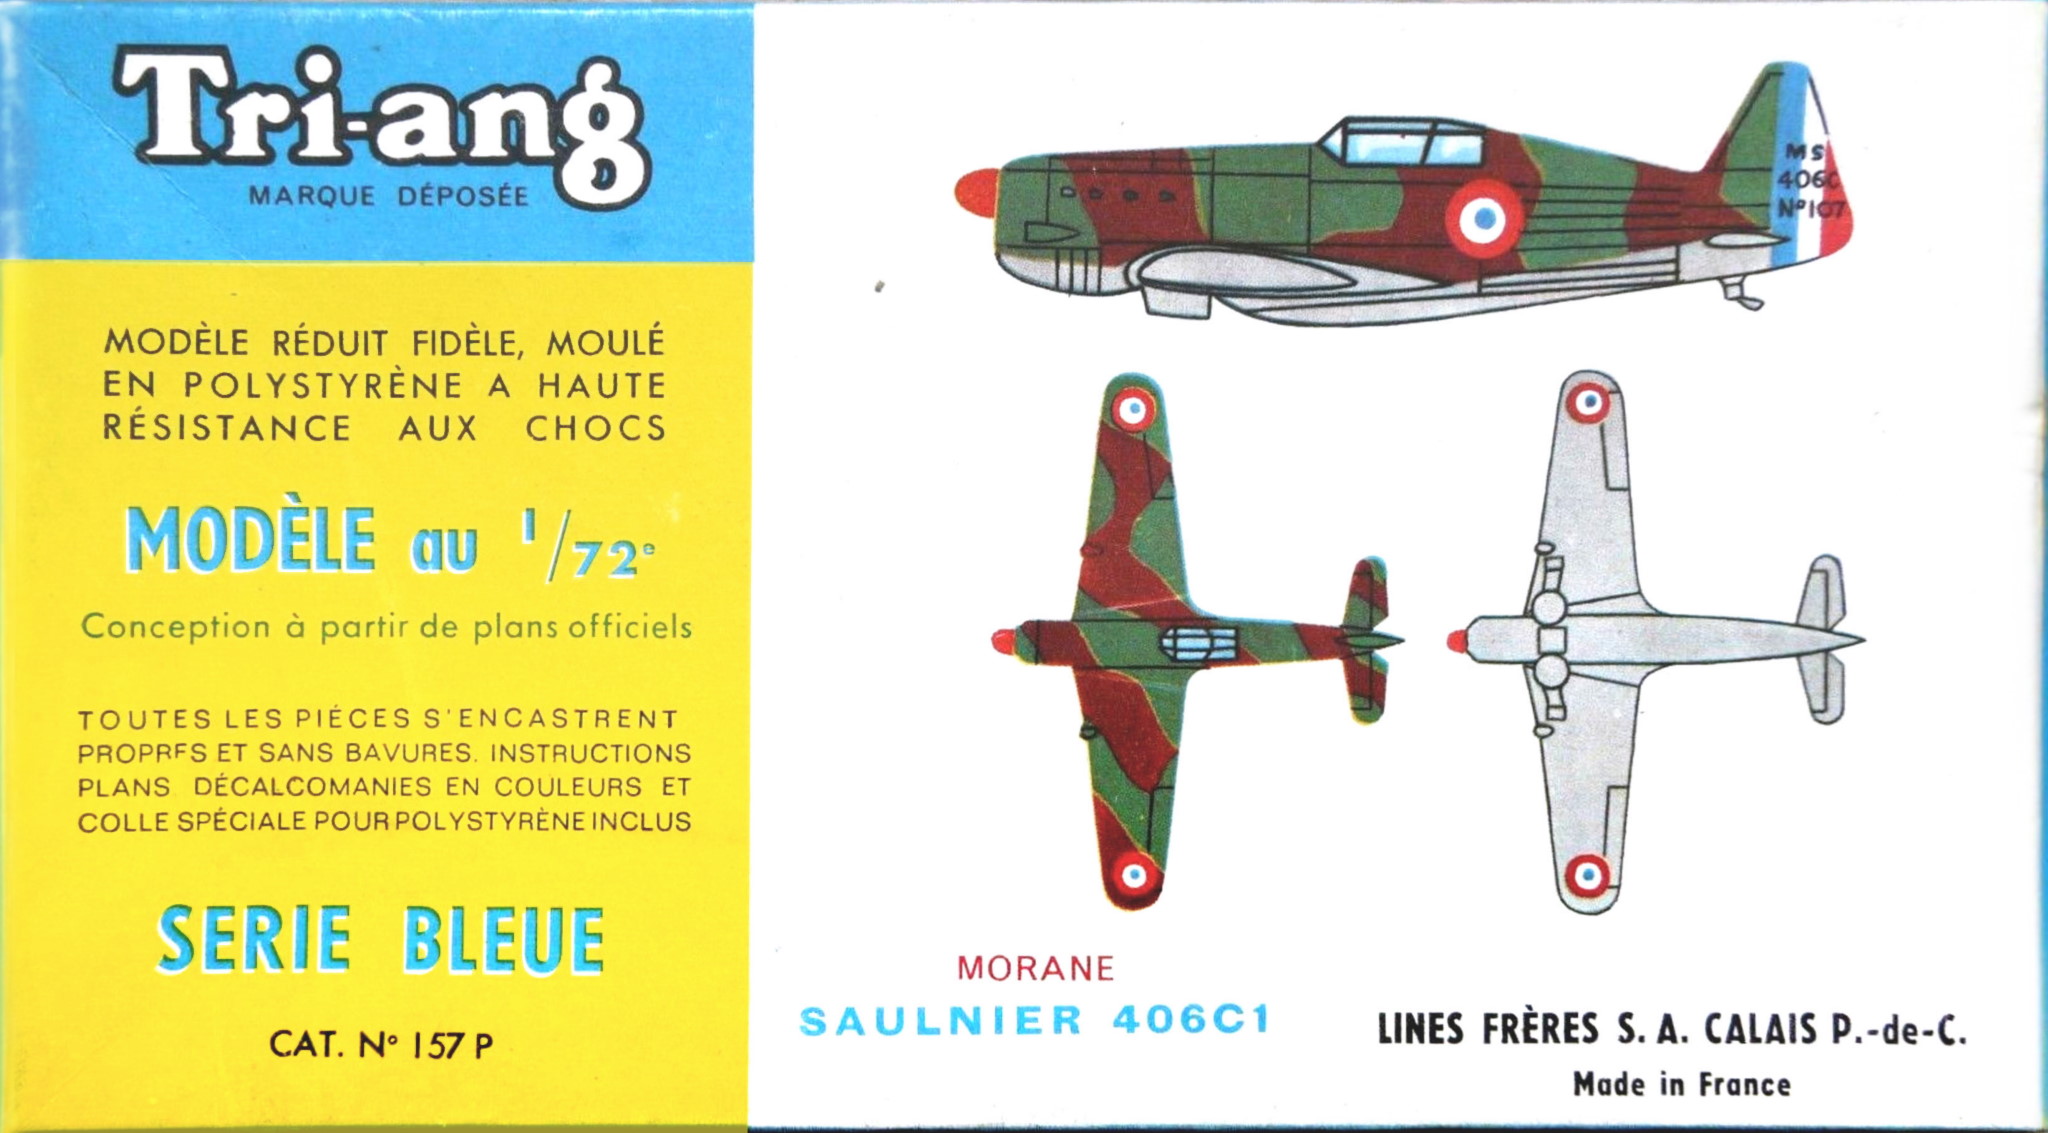 Коробка французской фабрики Tri-ang Serie Bleue, 157P Morane Saulnier 406, Lines Freres S.A., Calaise P.-de-C.